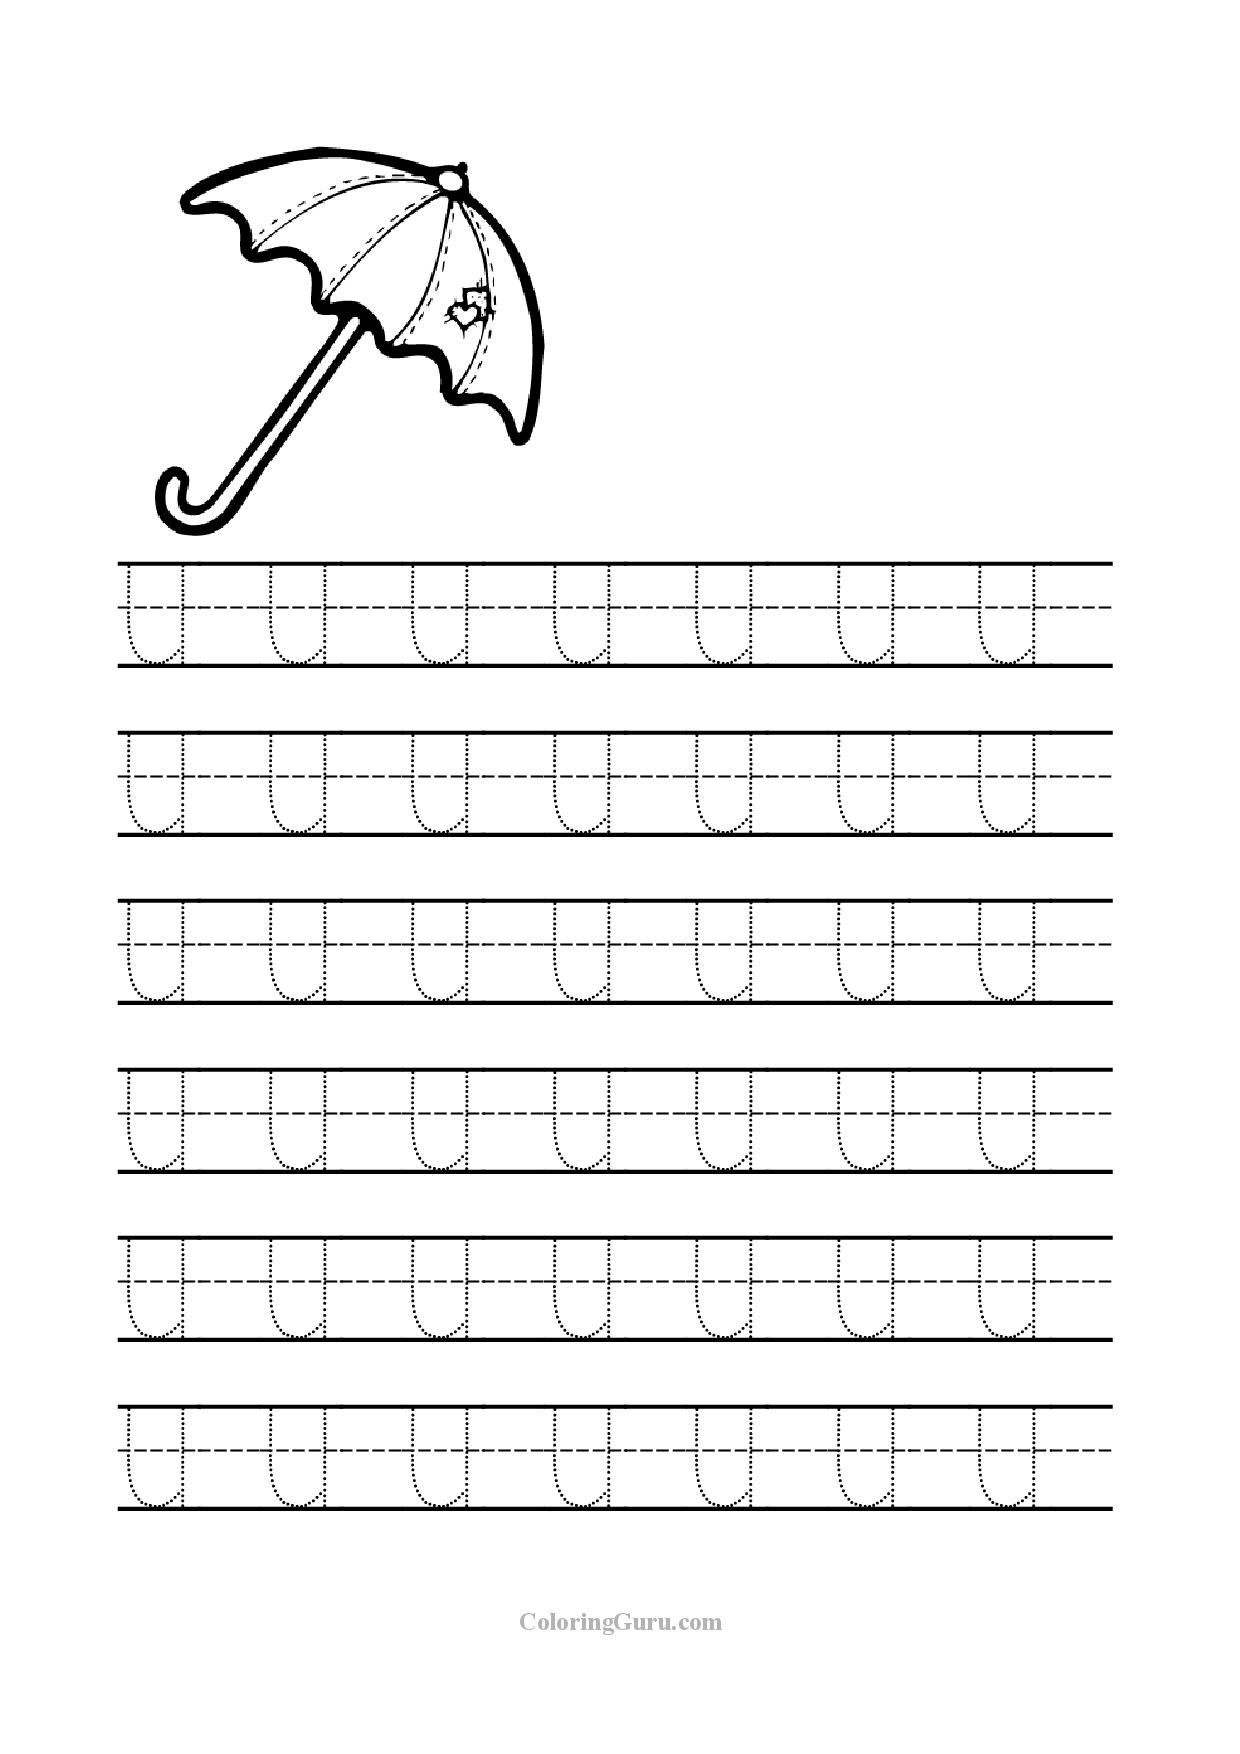 Free Printable Tracing Letter U Worksheets For Preschool inside Letter U Tracing Worksheet Free